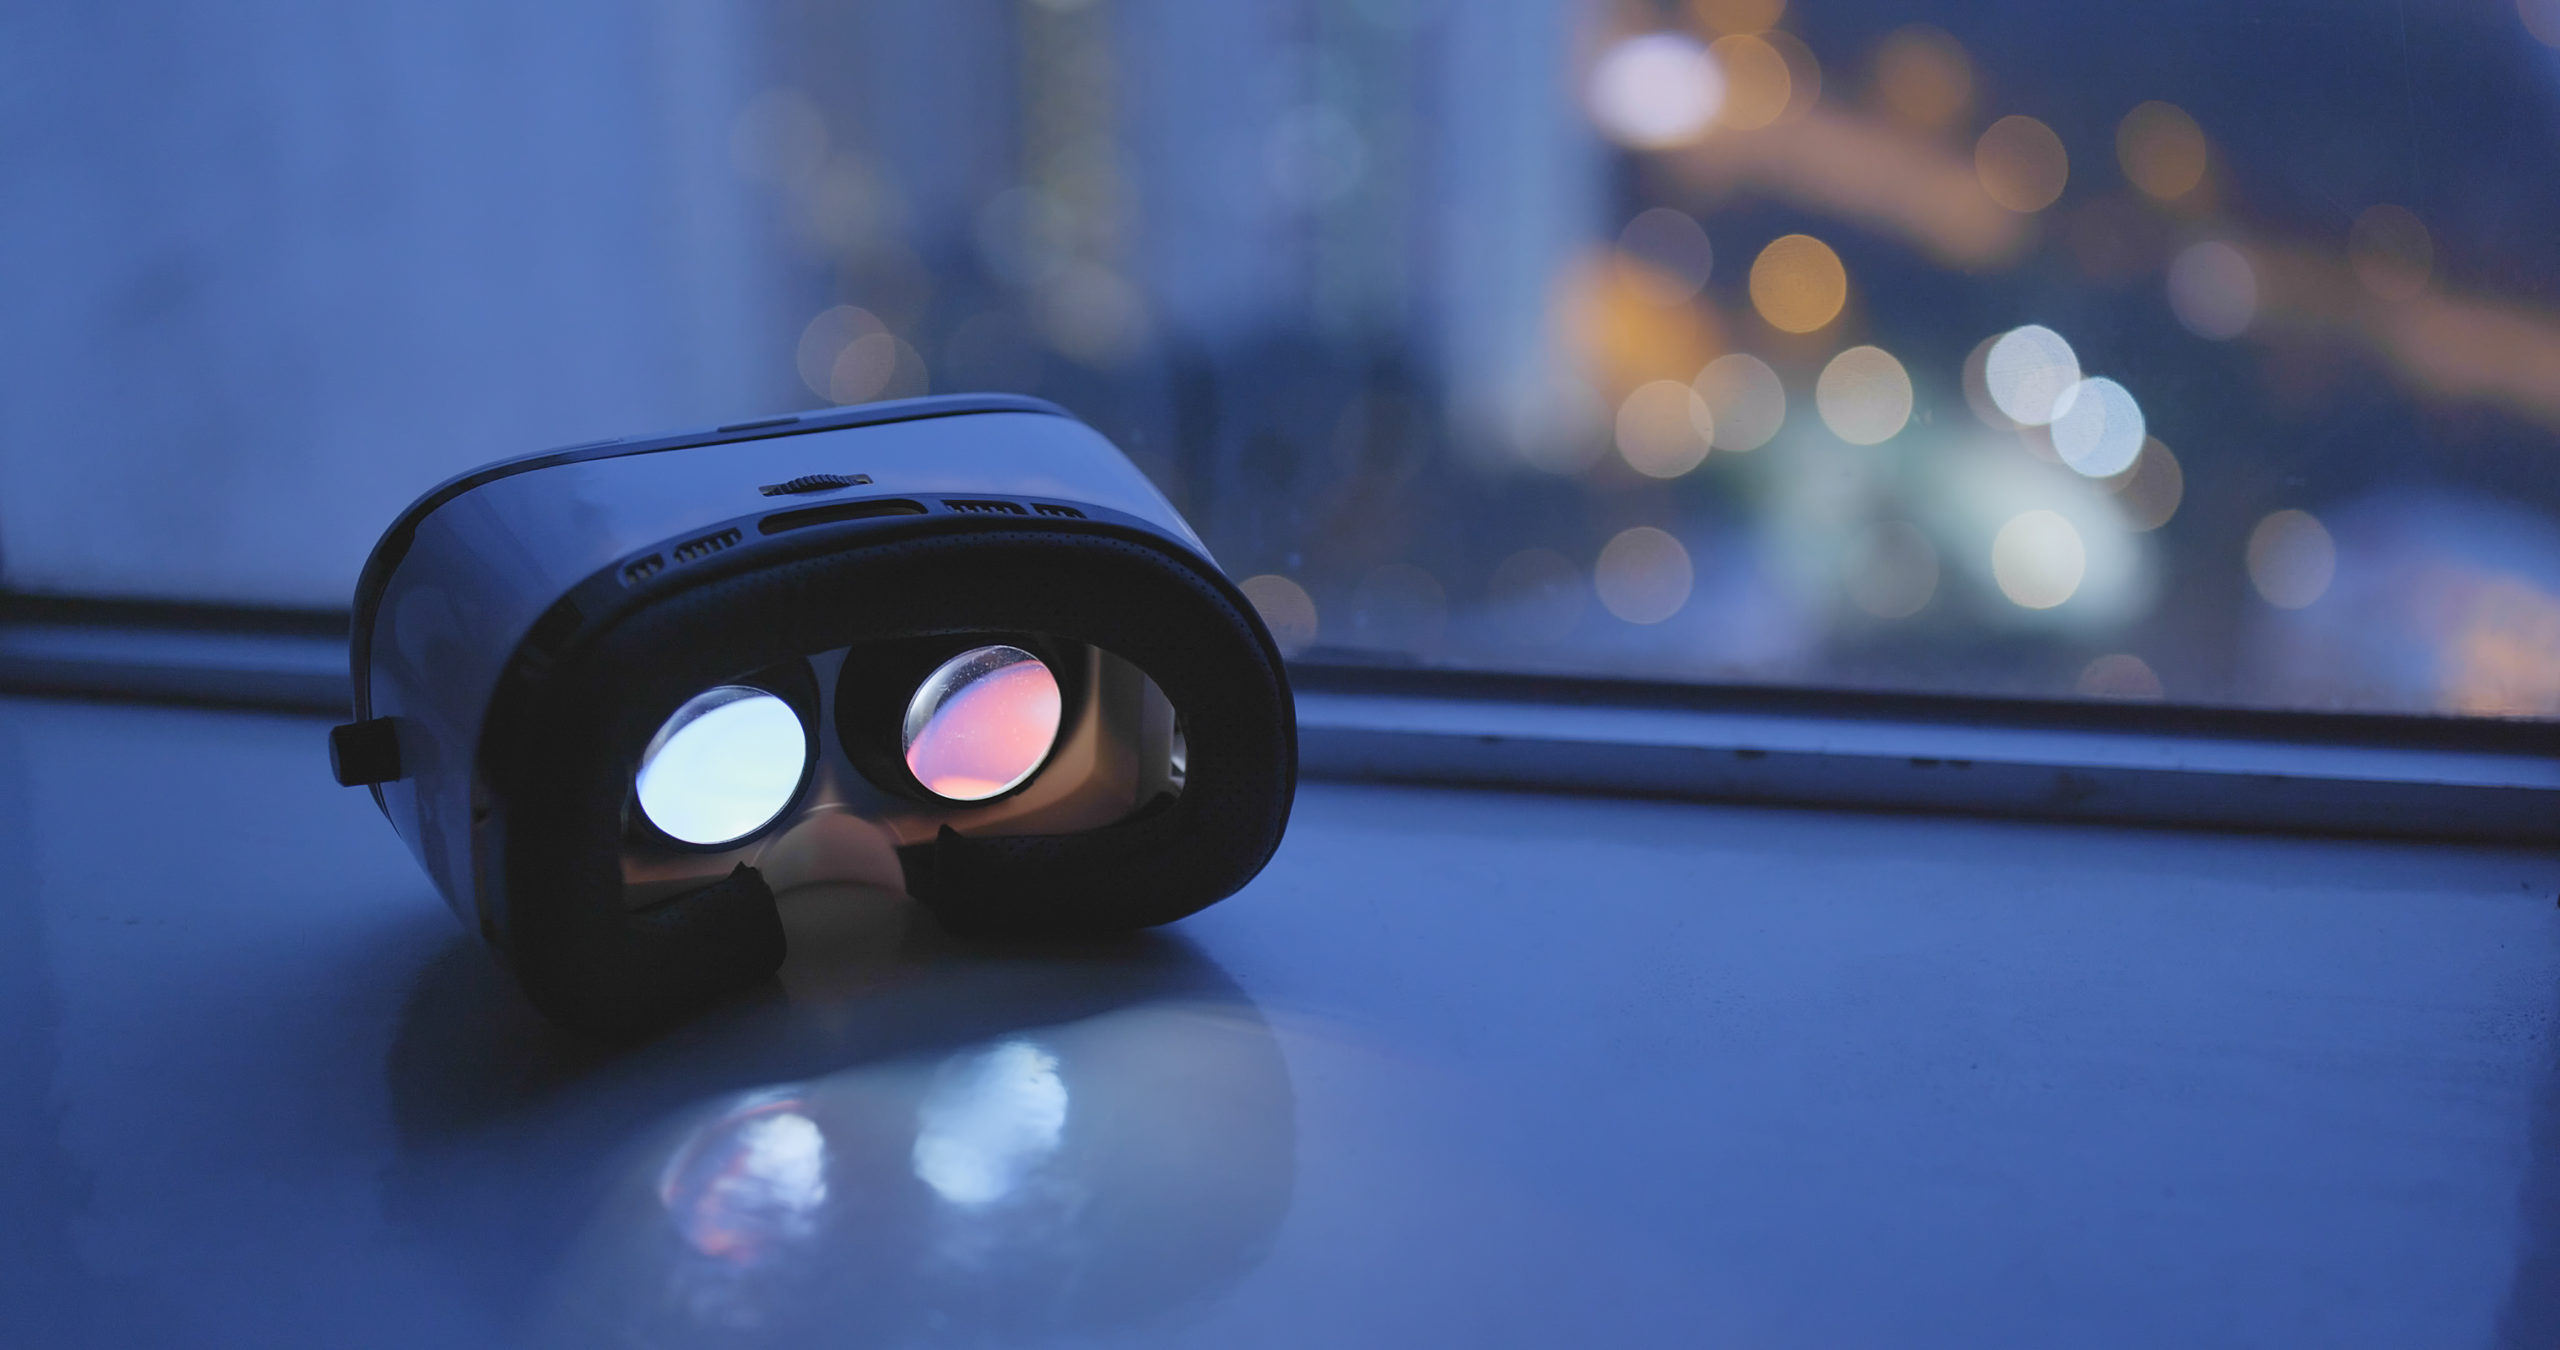 Virtual reality device at night